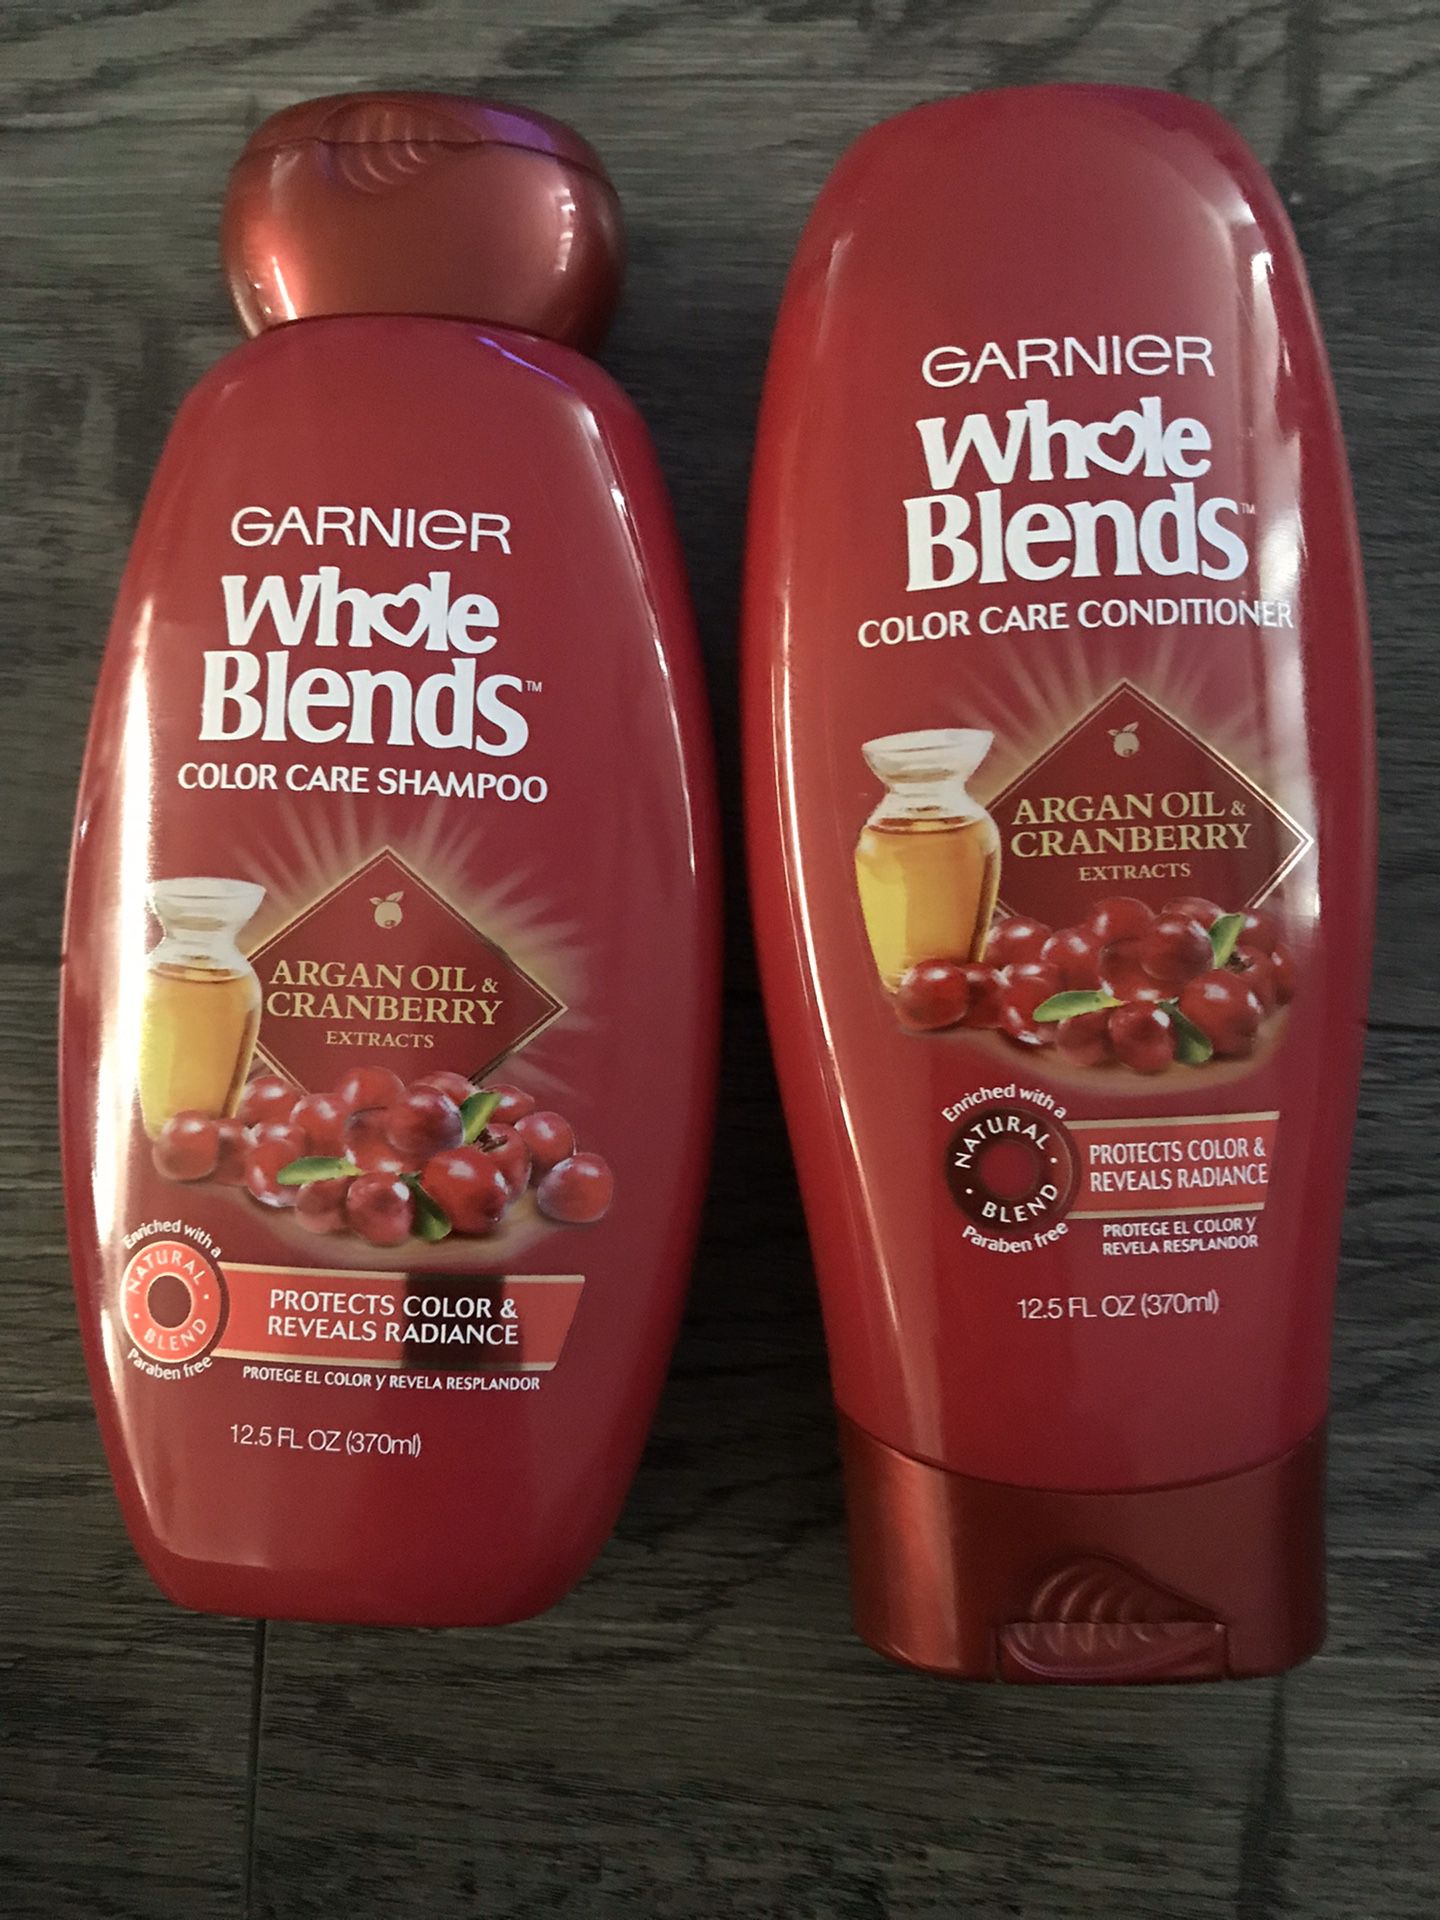 Garnier whole blends Argan oil & cranberry shampoo and conditioner set